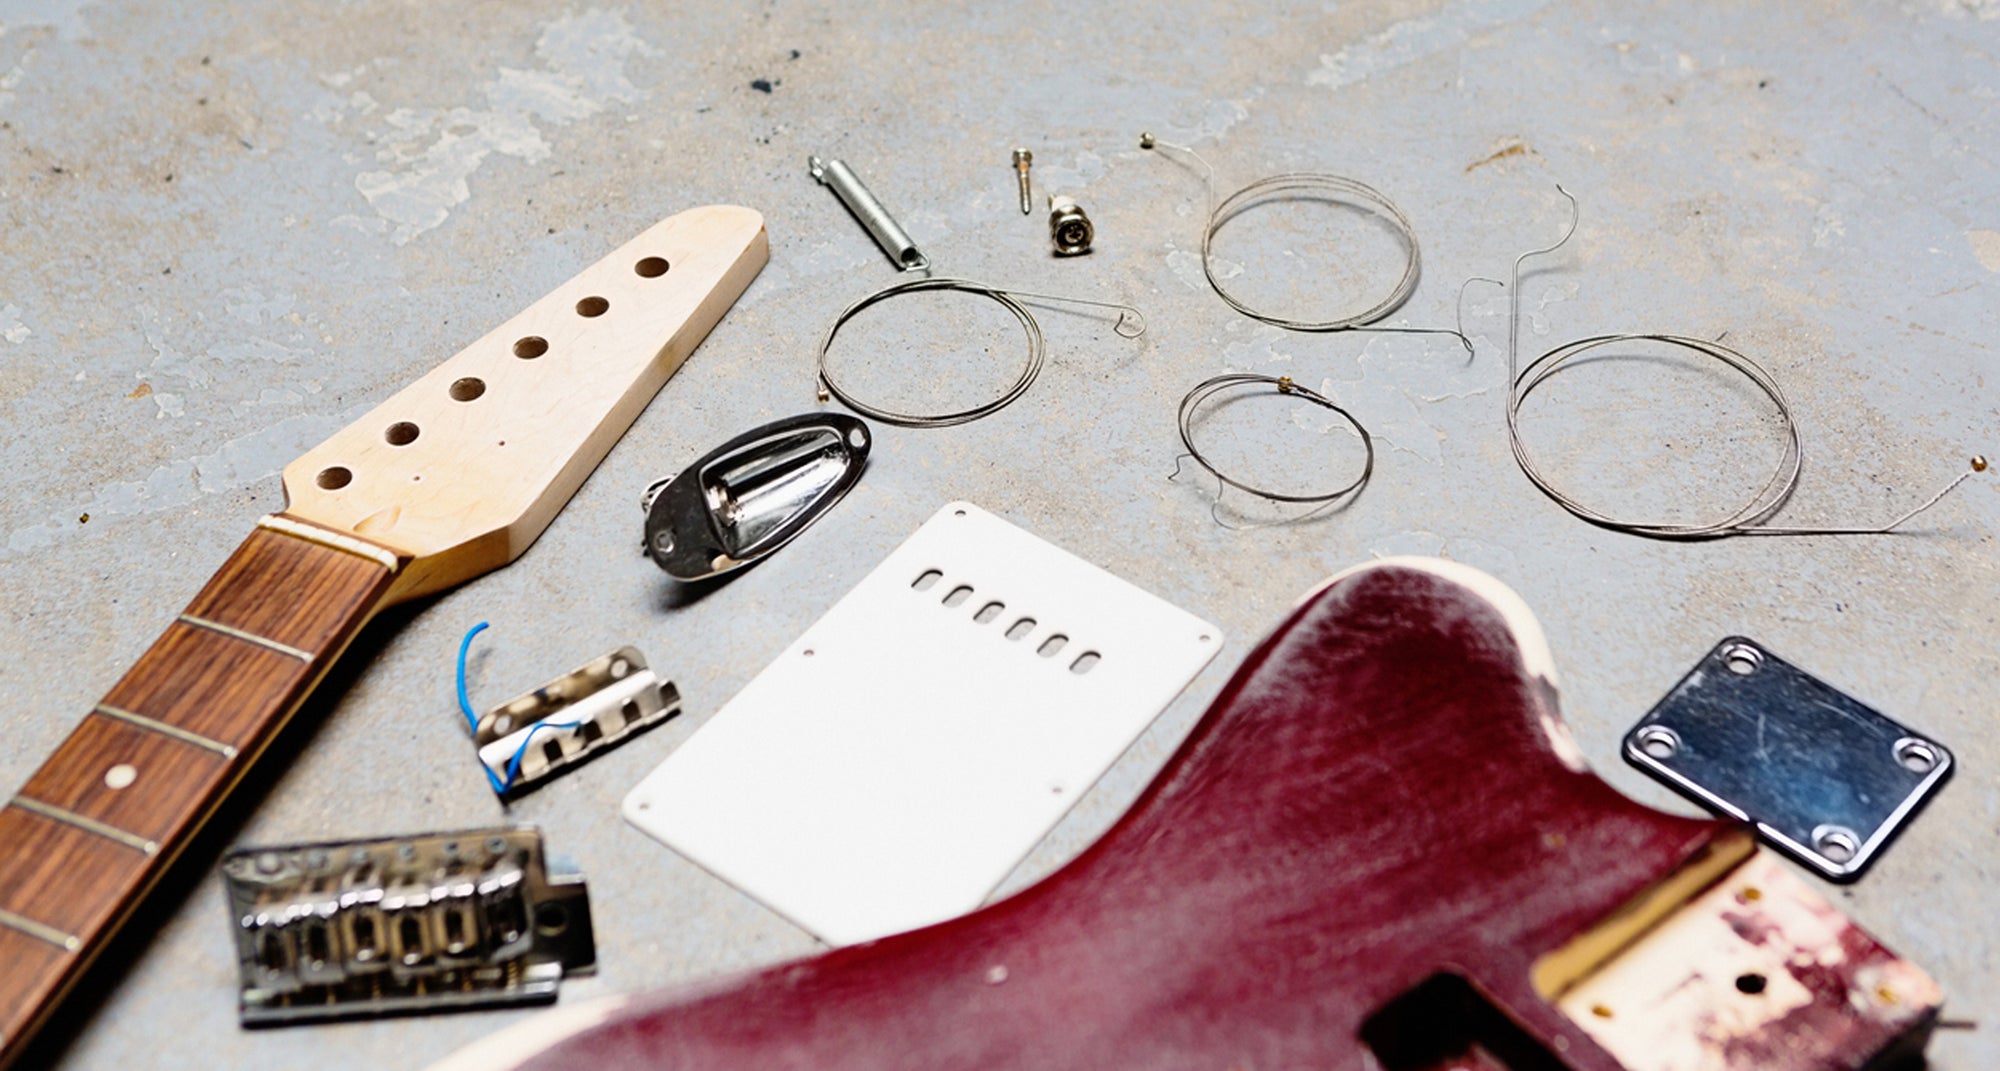 Guitar Kits - Reviews on the Best DIY Kit Vendors